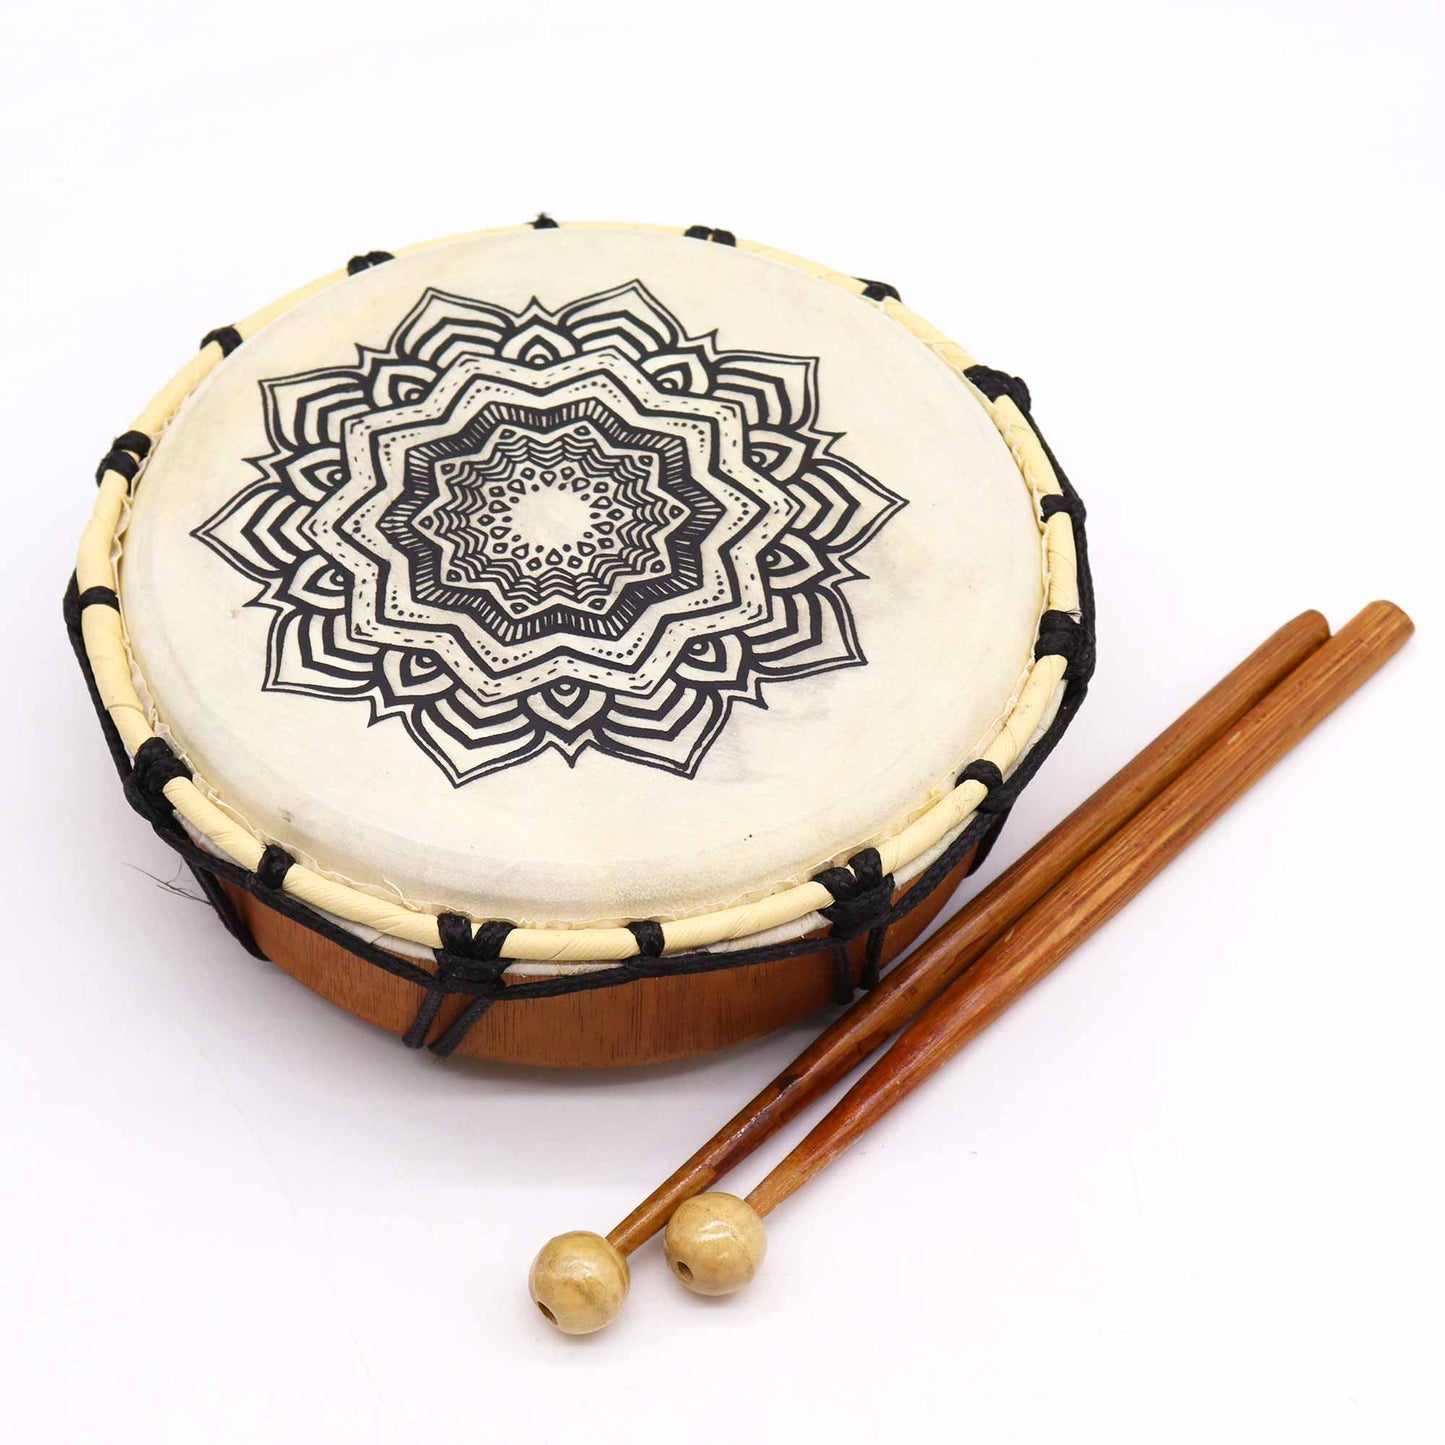 Mandala Shamanic Drum with Sticks - 20cm